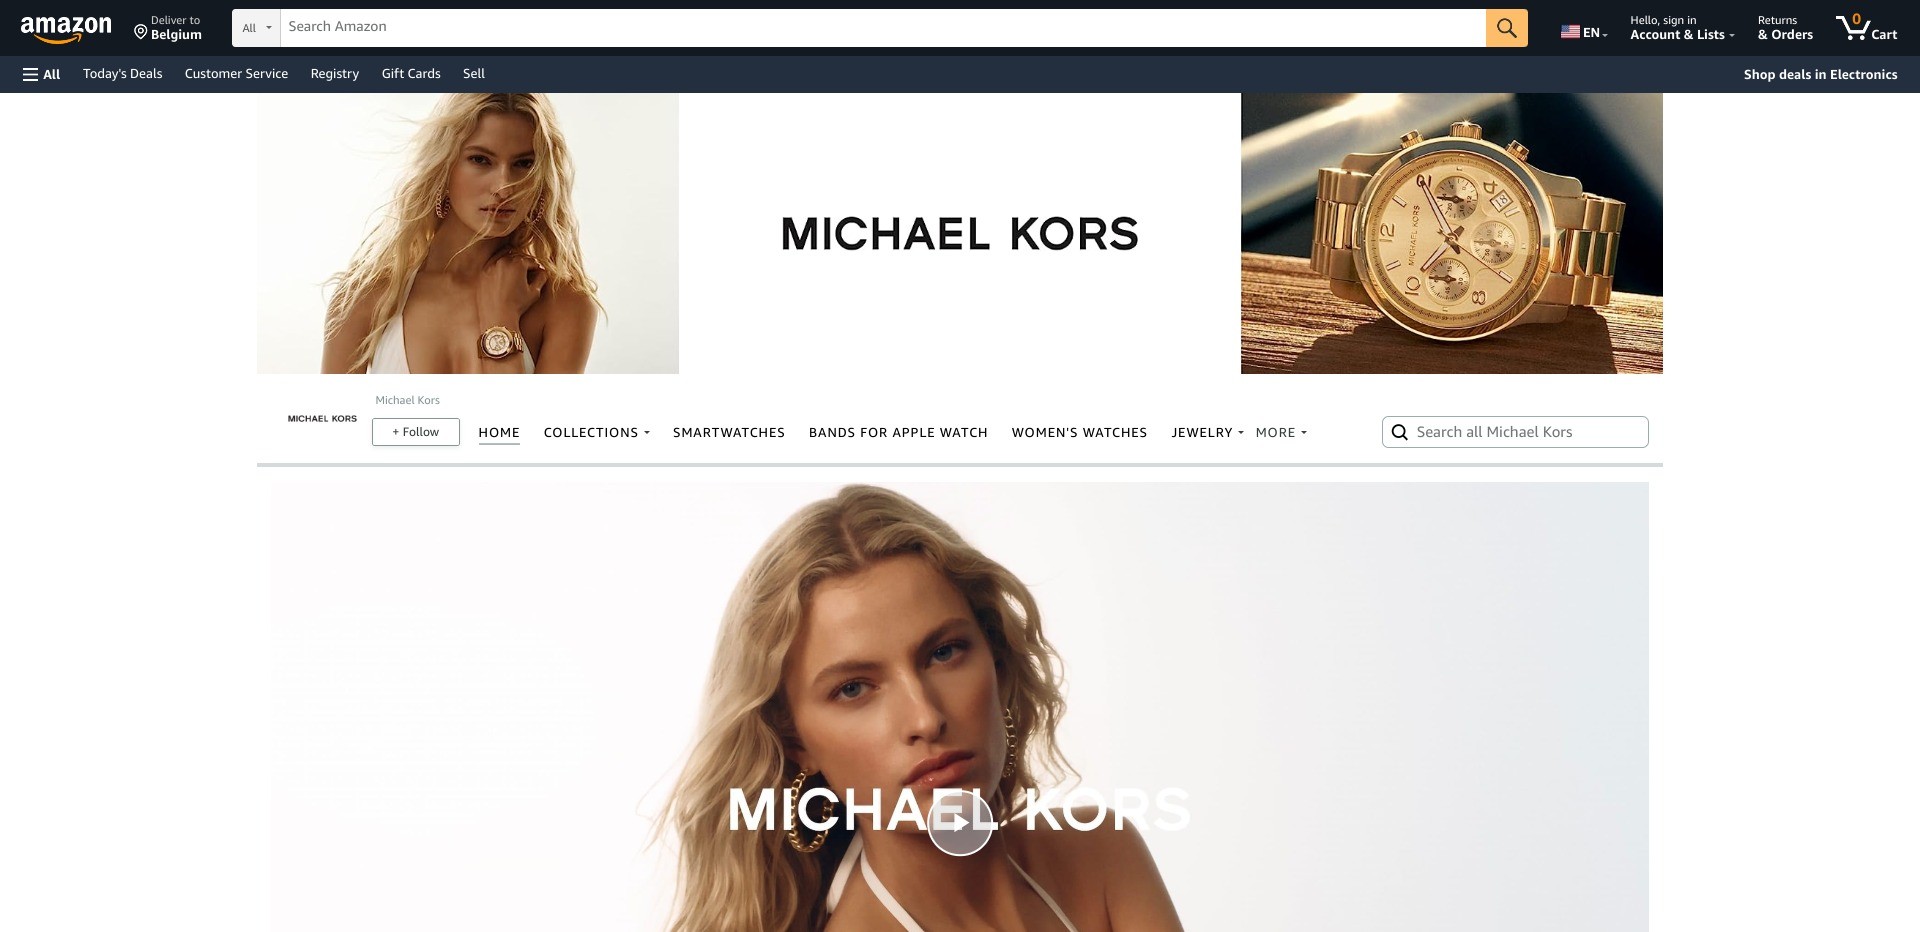 Screenshot of the Michael Kors brand store featured on amazon.com